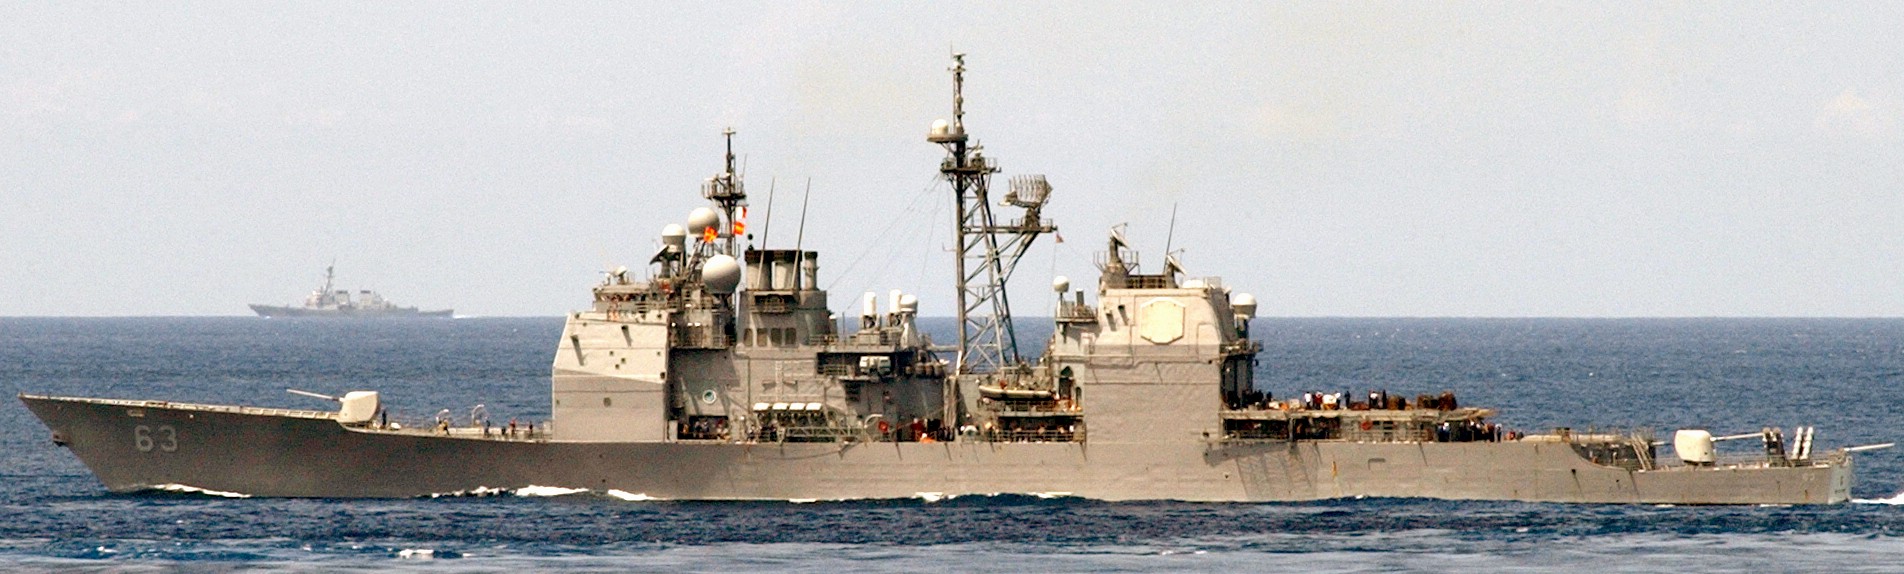 cg-63 uss cowpens ticonderoga class guided missile cruiser aegis us navy arabian gulf 05